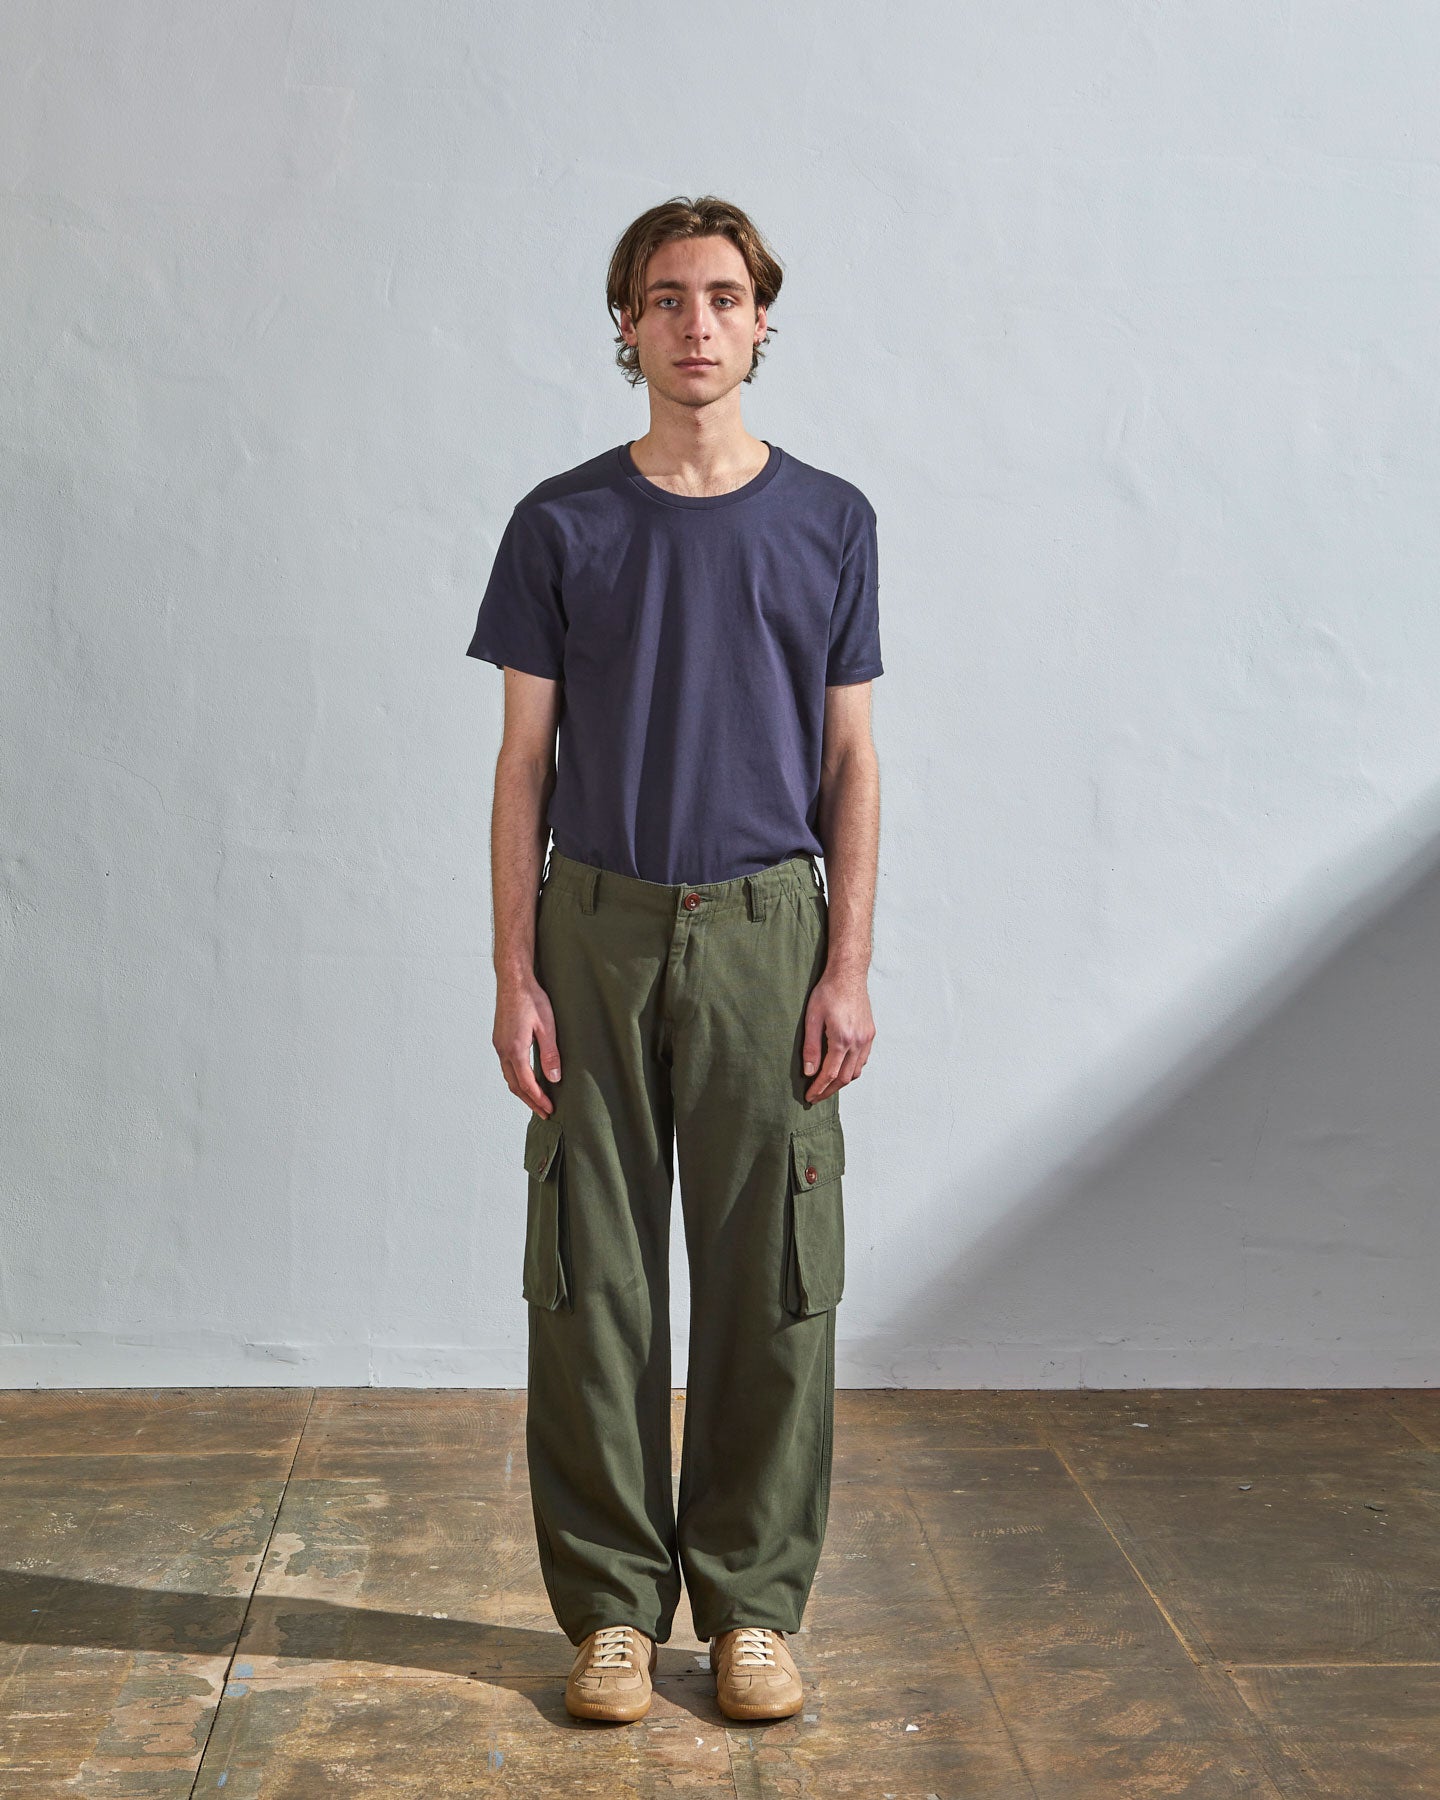 $100 32 Degrees Cool Men'S Pajama Black Shirt Green Pants Set Sleepwear  Size S | eBay